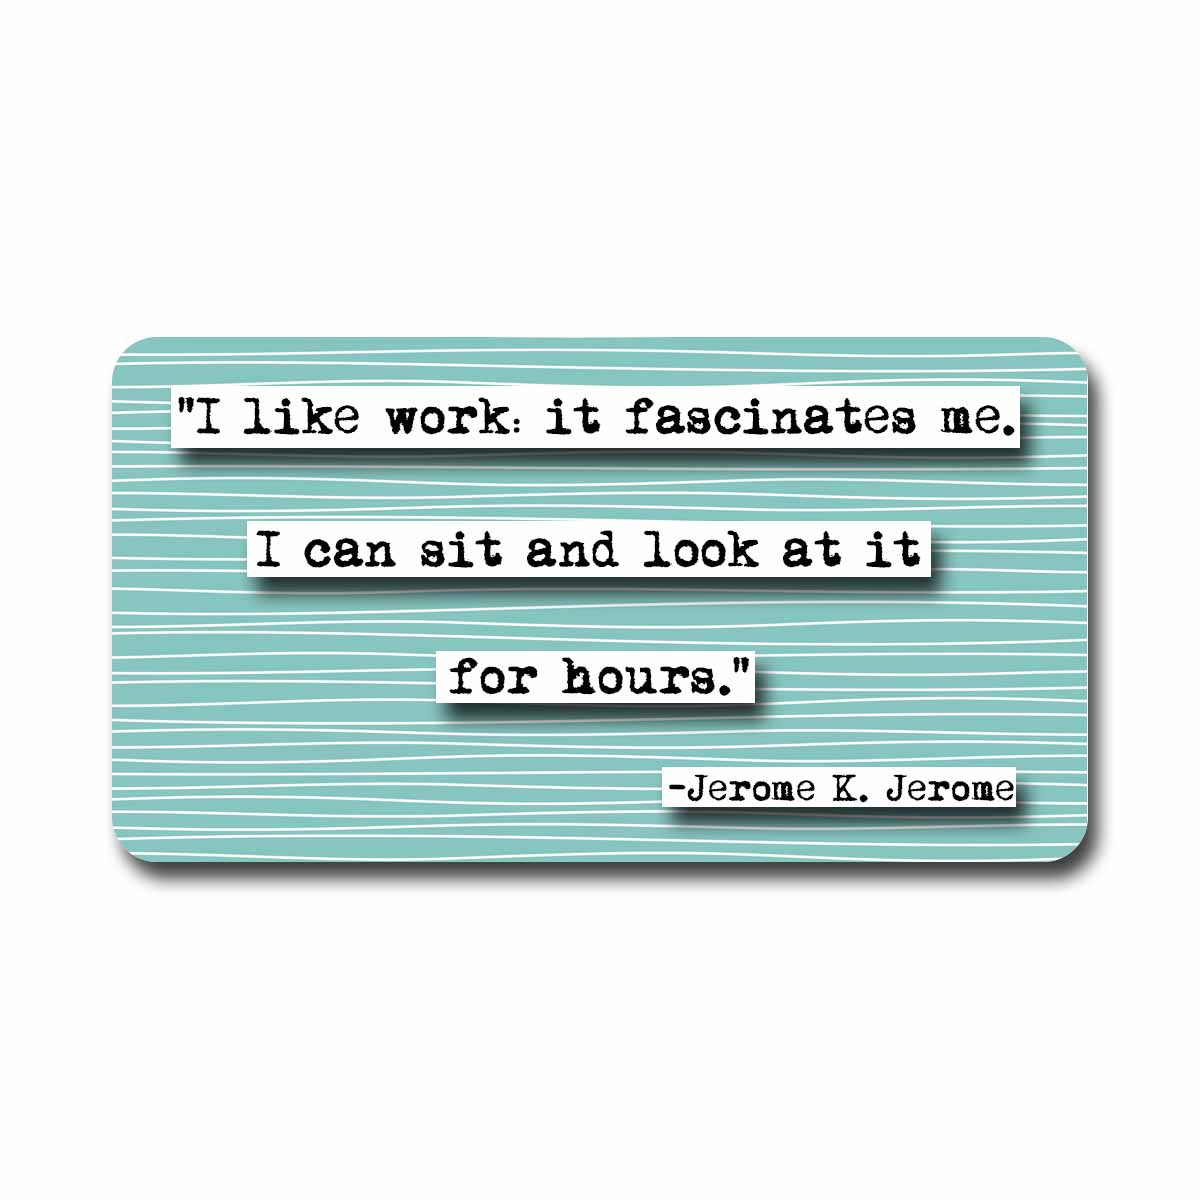 Work Pocket Wisdom Mini Quote Cards Set of 12